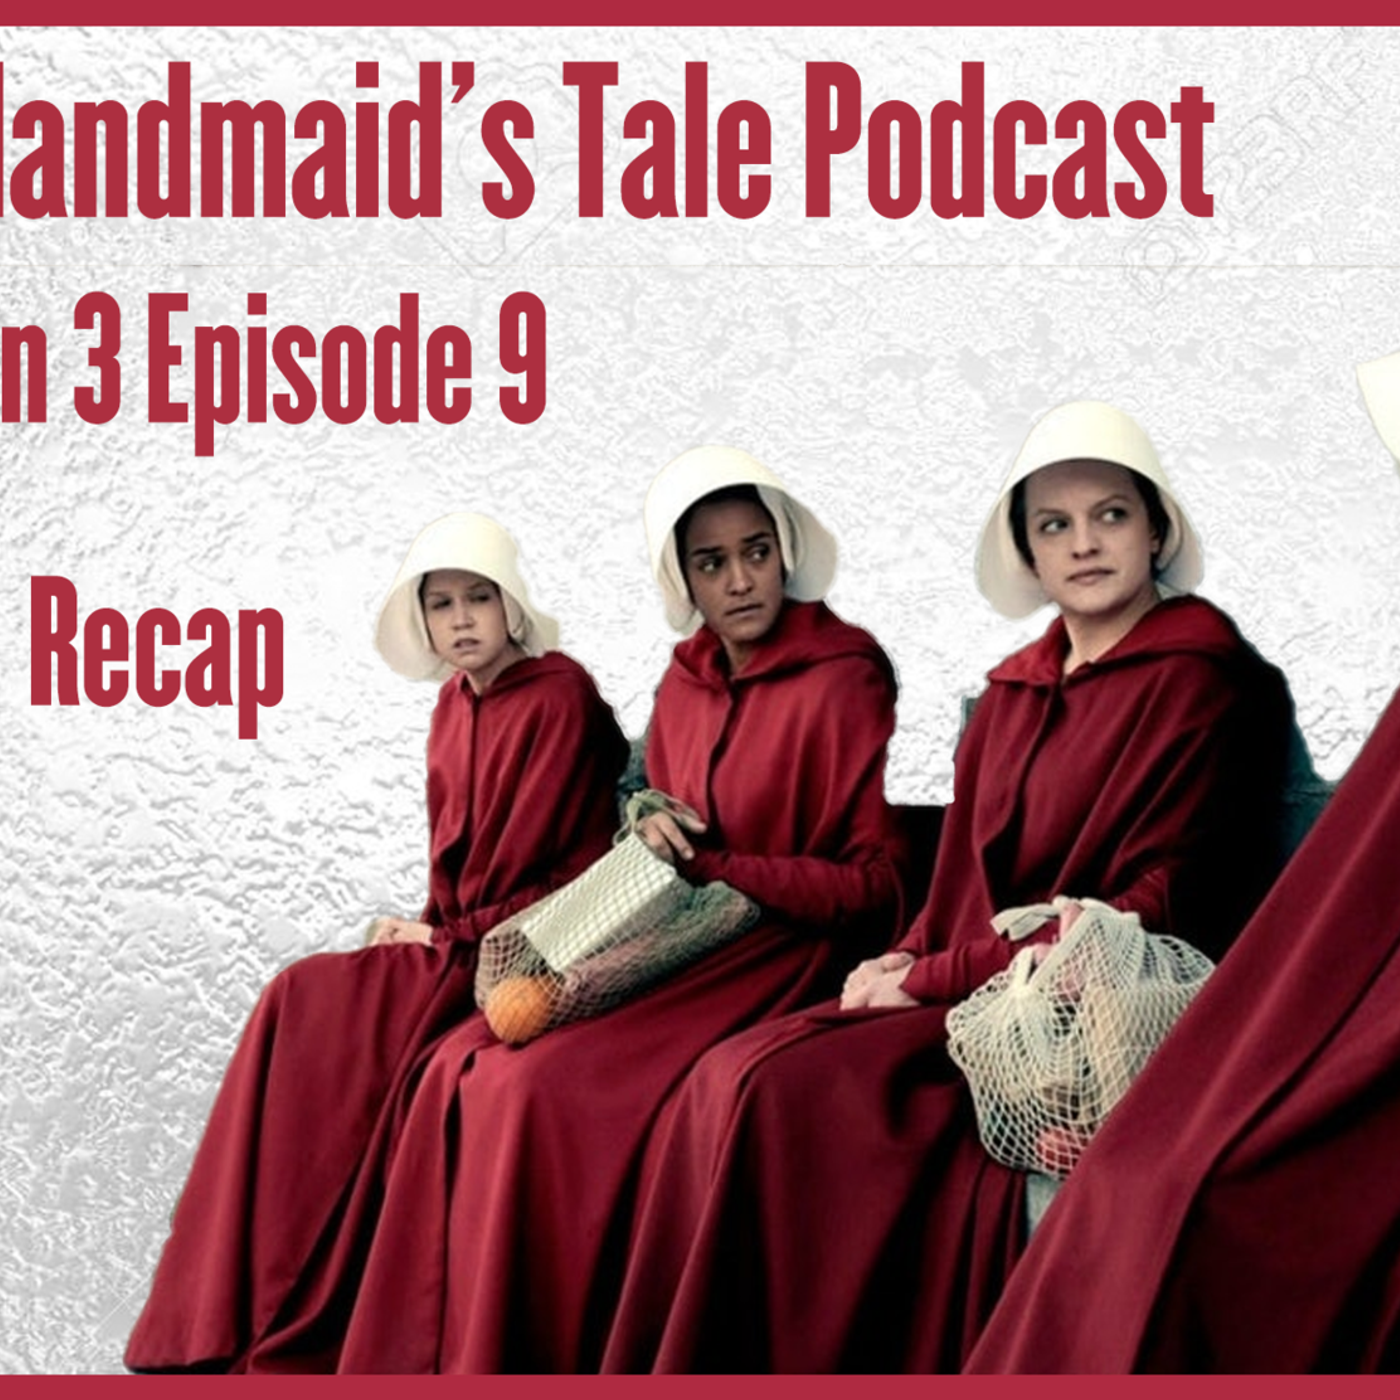 The Handmaid's Tale Podcast Season 3 Episode 9 Recap